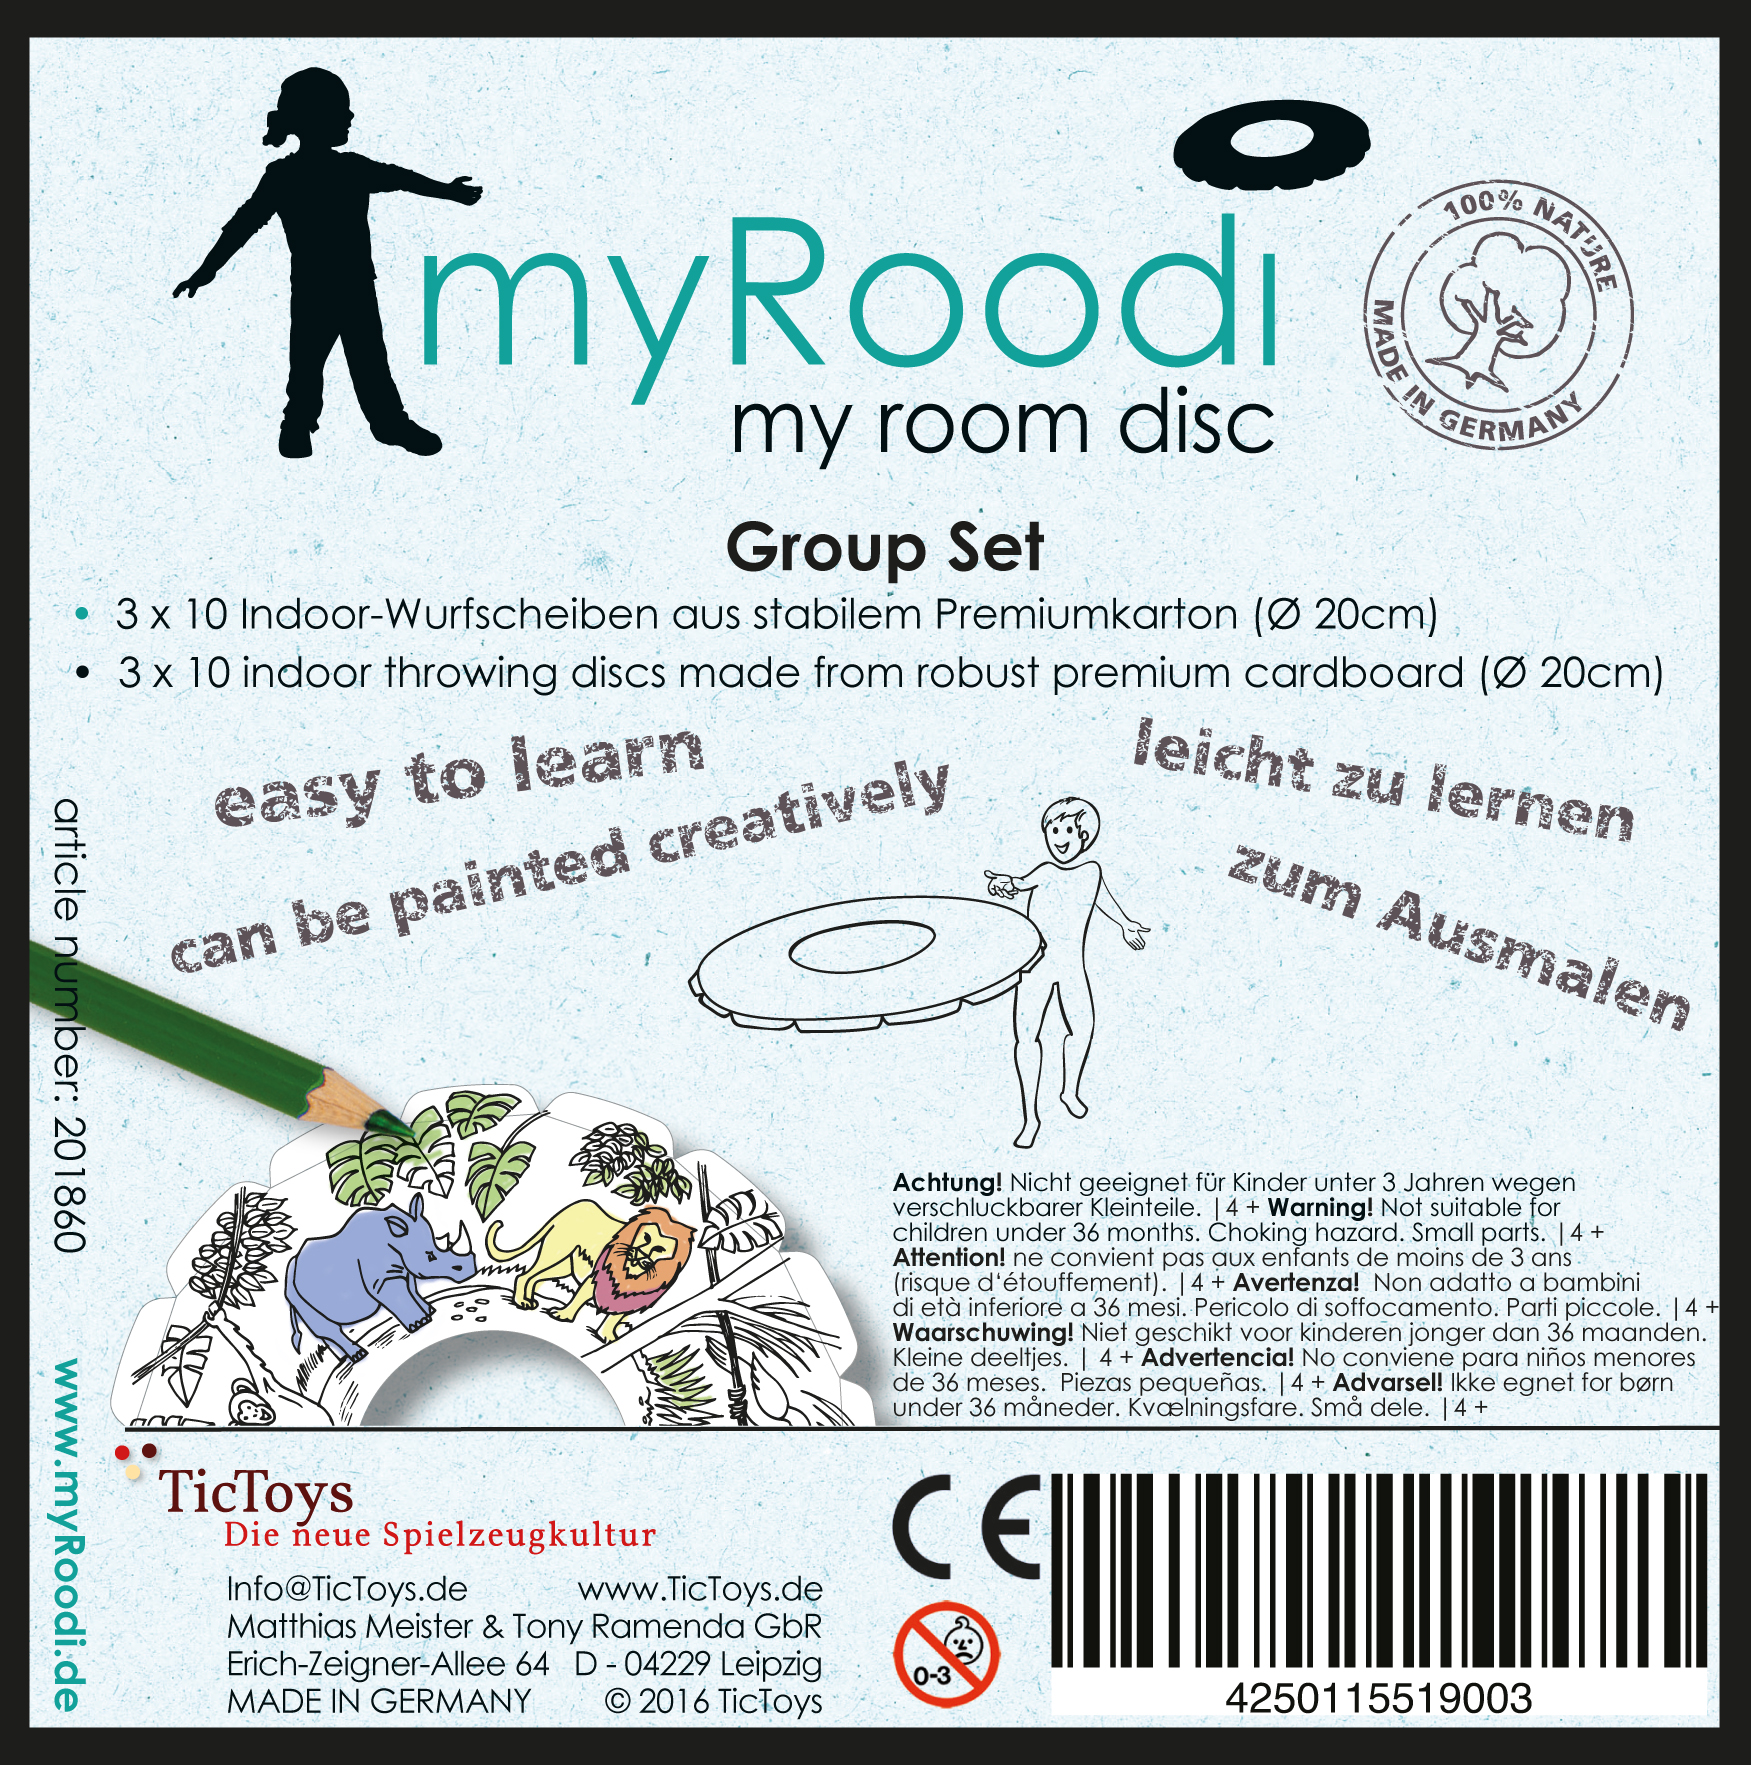 myRoodi – group set EN